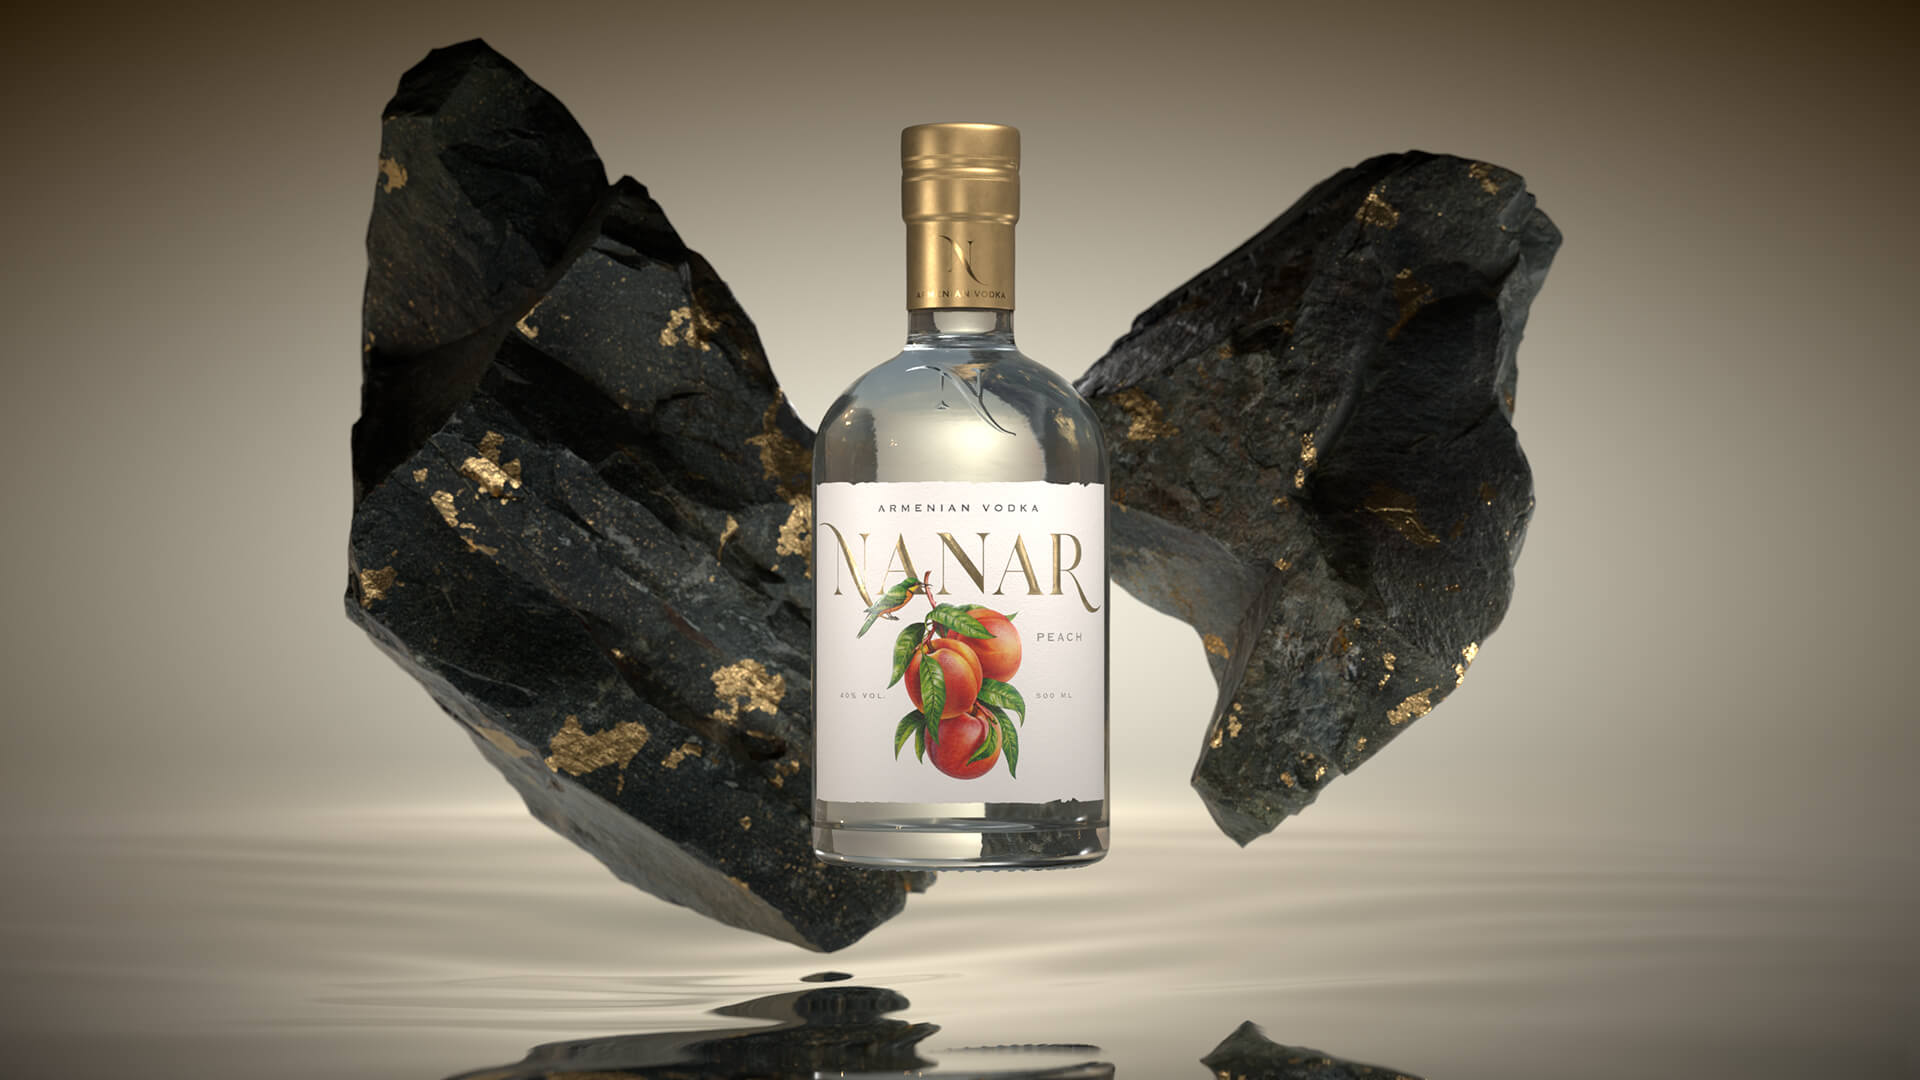 Commersart Creates Packaging Design for Nanar Armenian Fruit Vodka